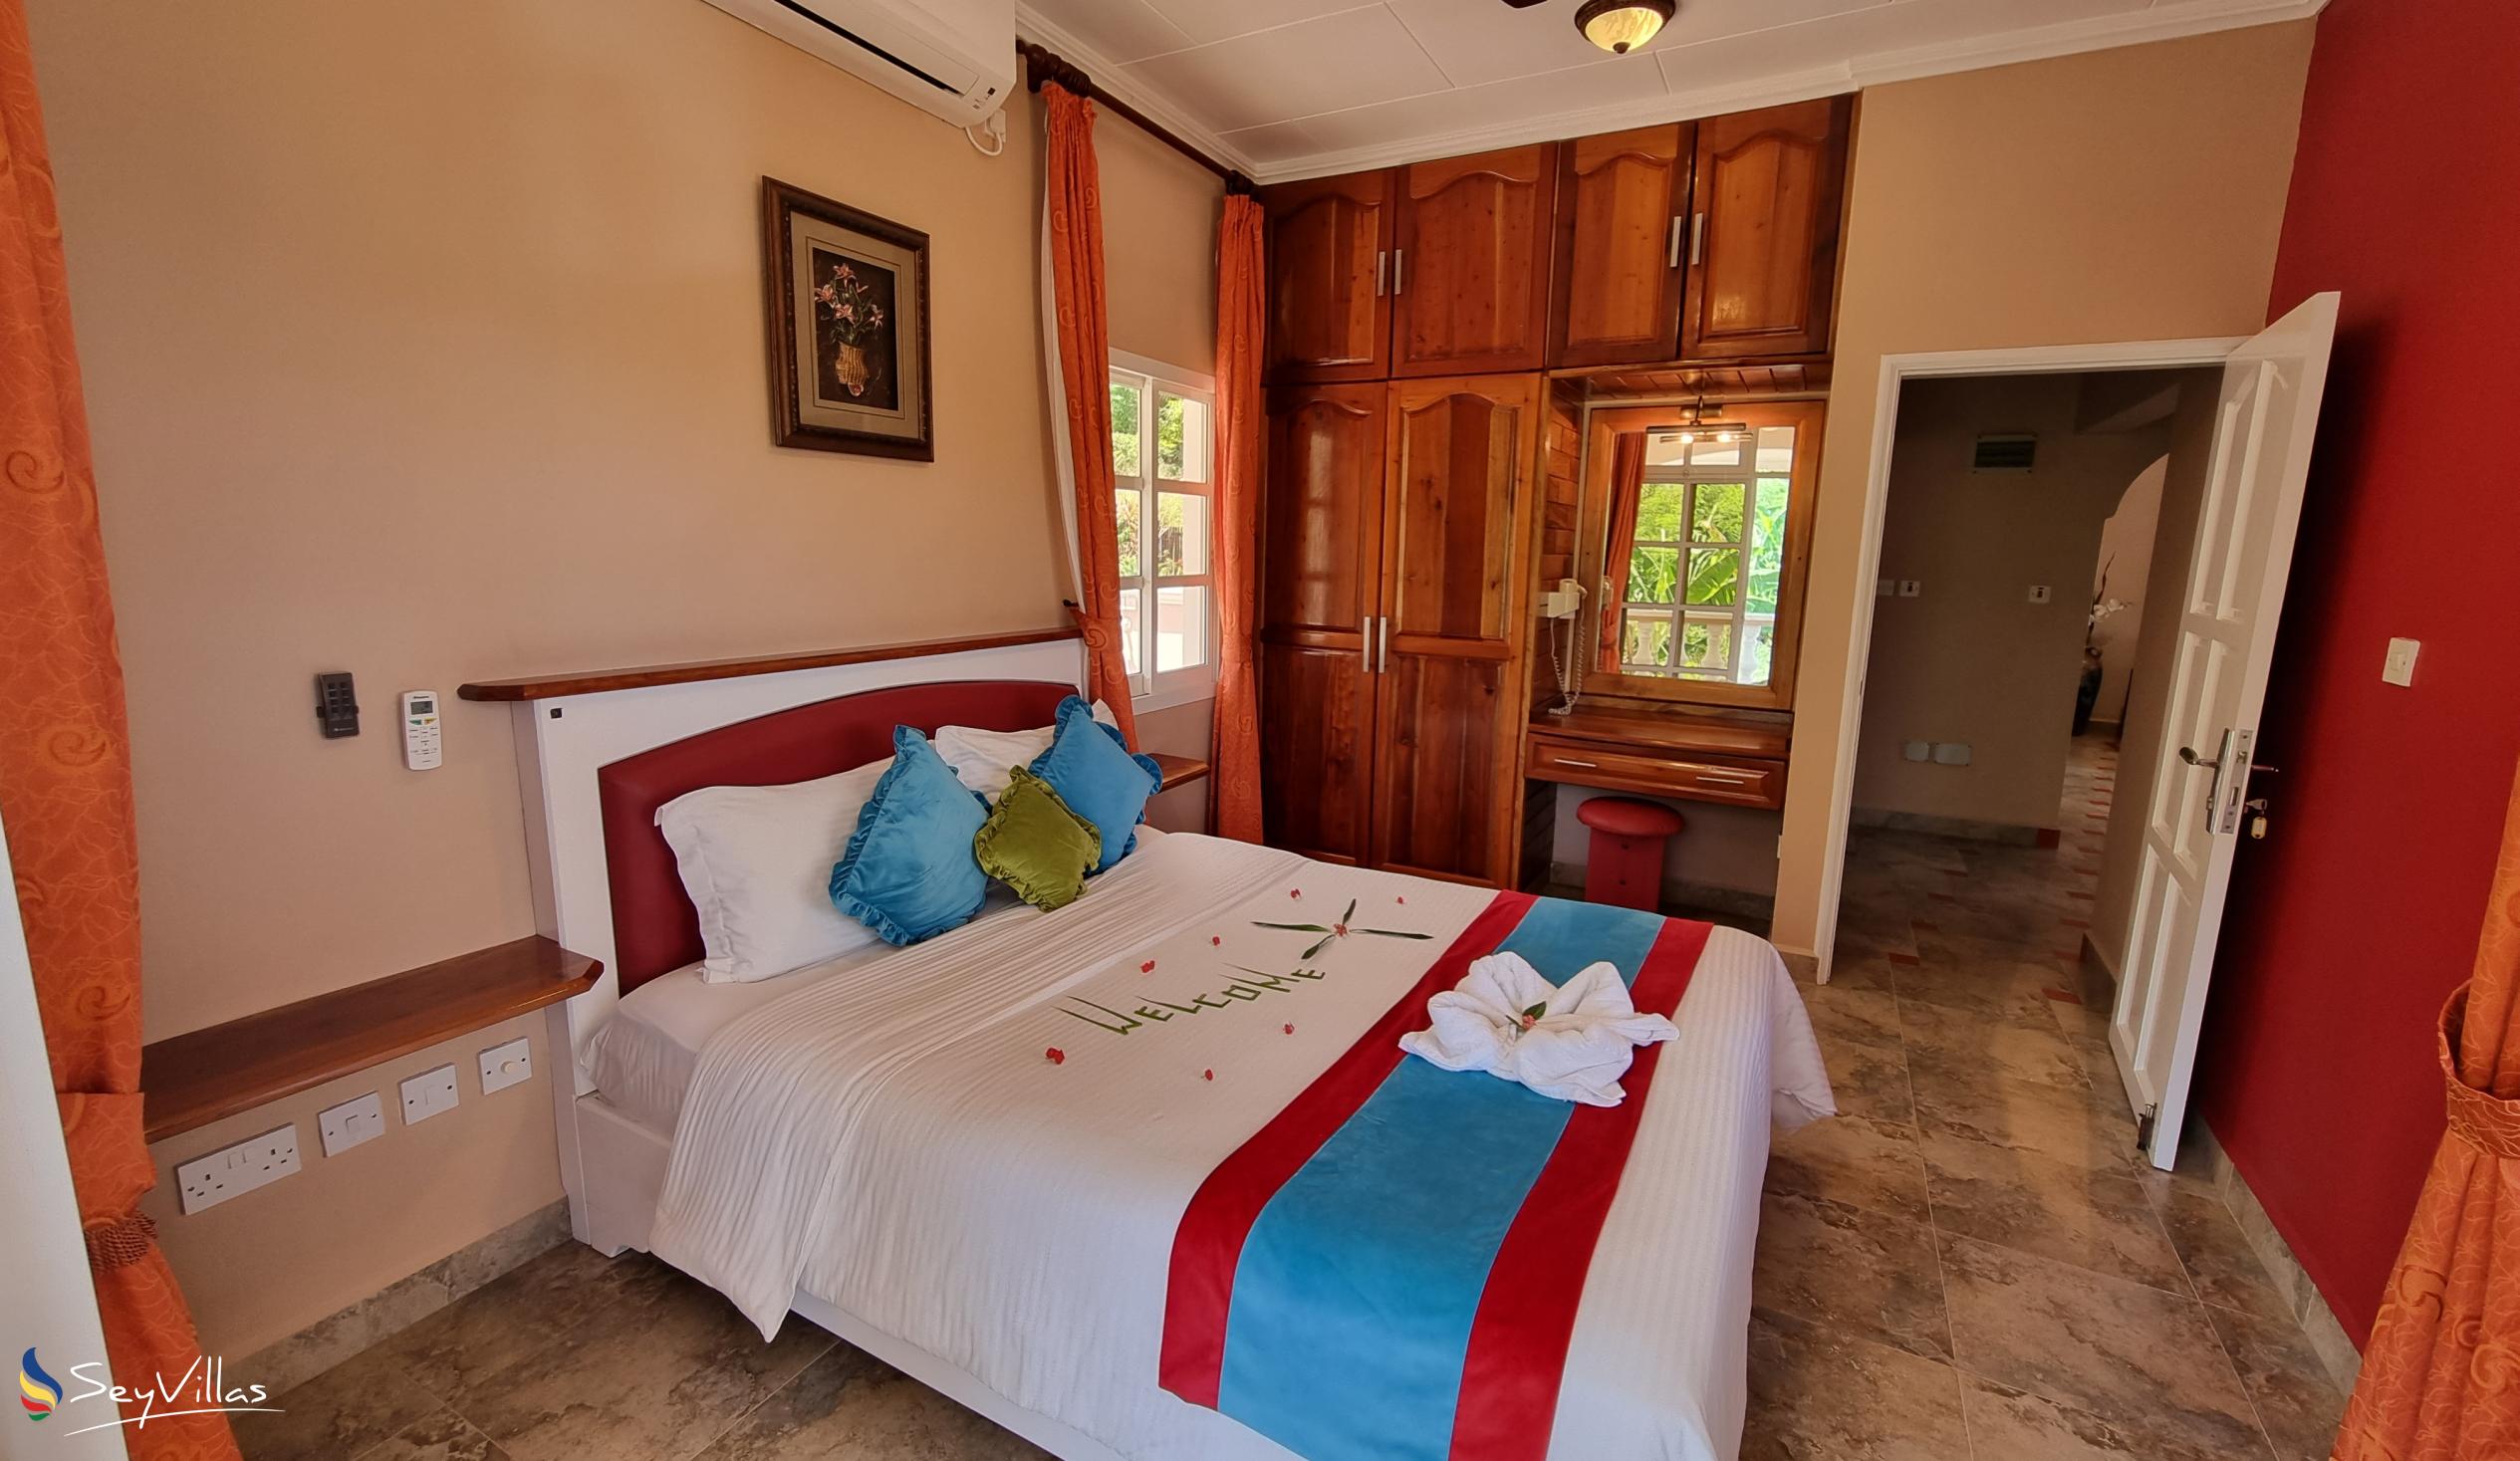 Photo 101: Au Fond de Mer View - 2-Bedroom Apartment with sea view - Mahé (Seychelles)